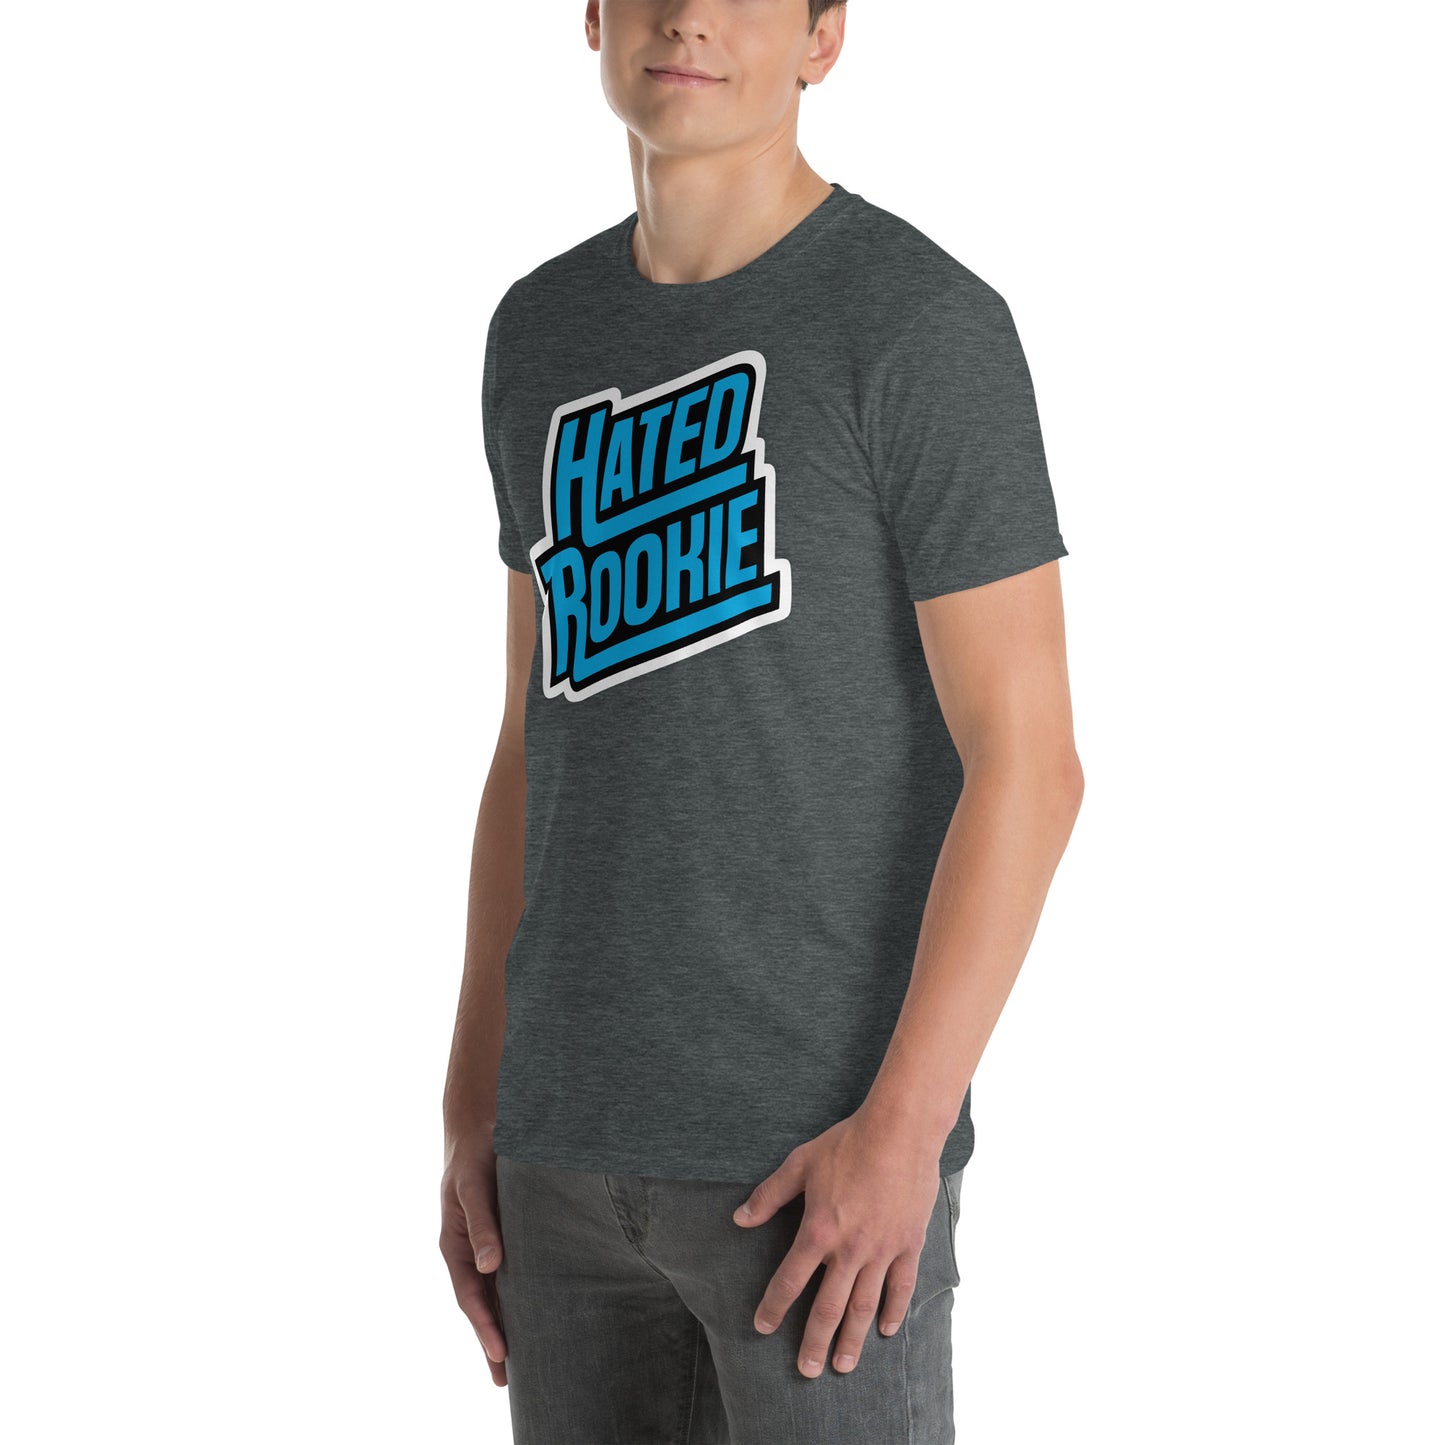 Hated Rookie Short-Sleeve Unisex T-Shirt